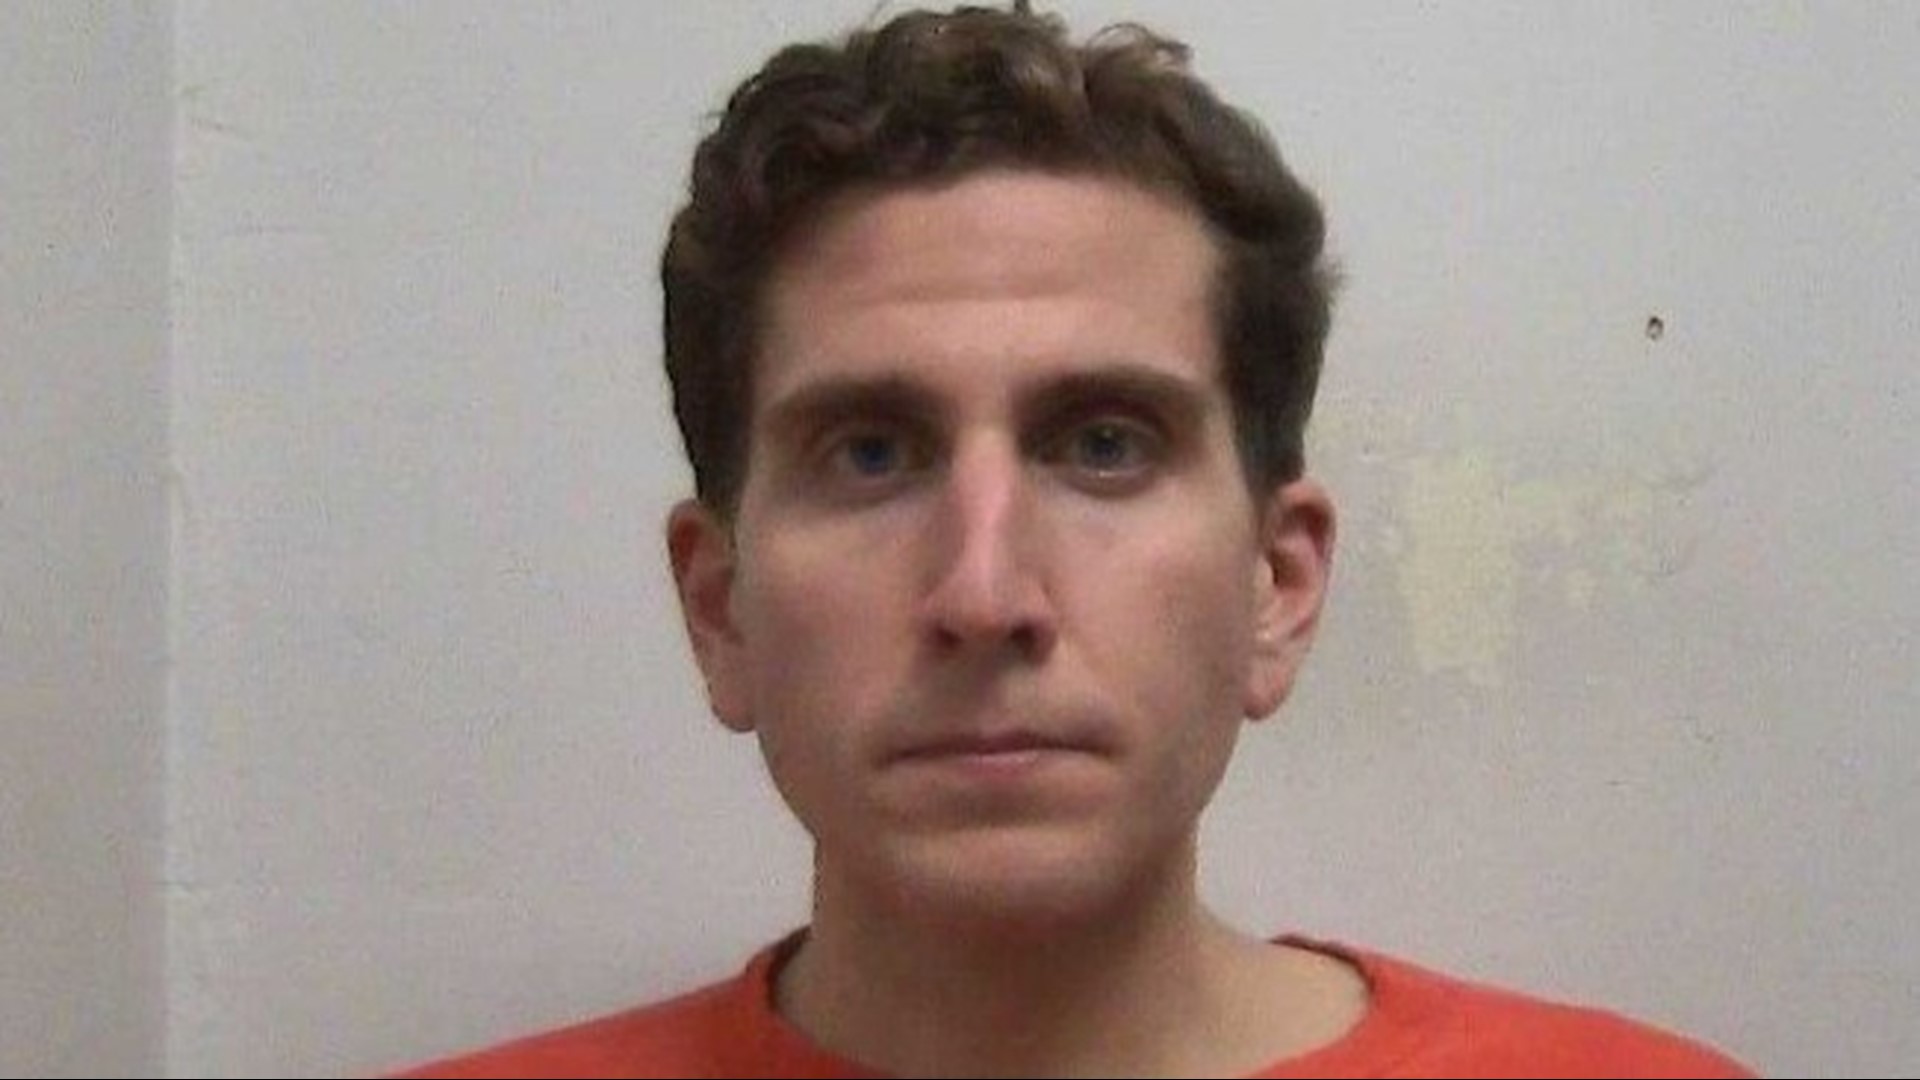 Moscow murder suspect Bryan Kohberger scheduled in Idaho court today